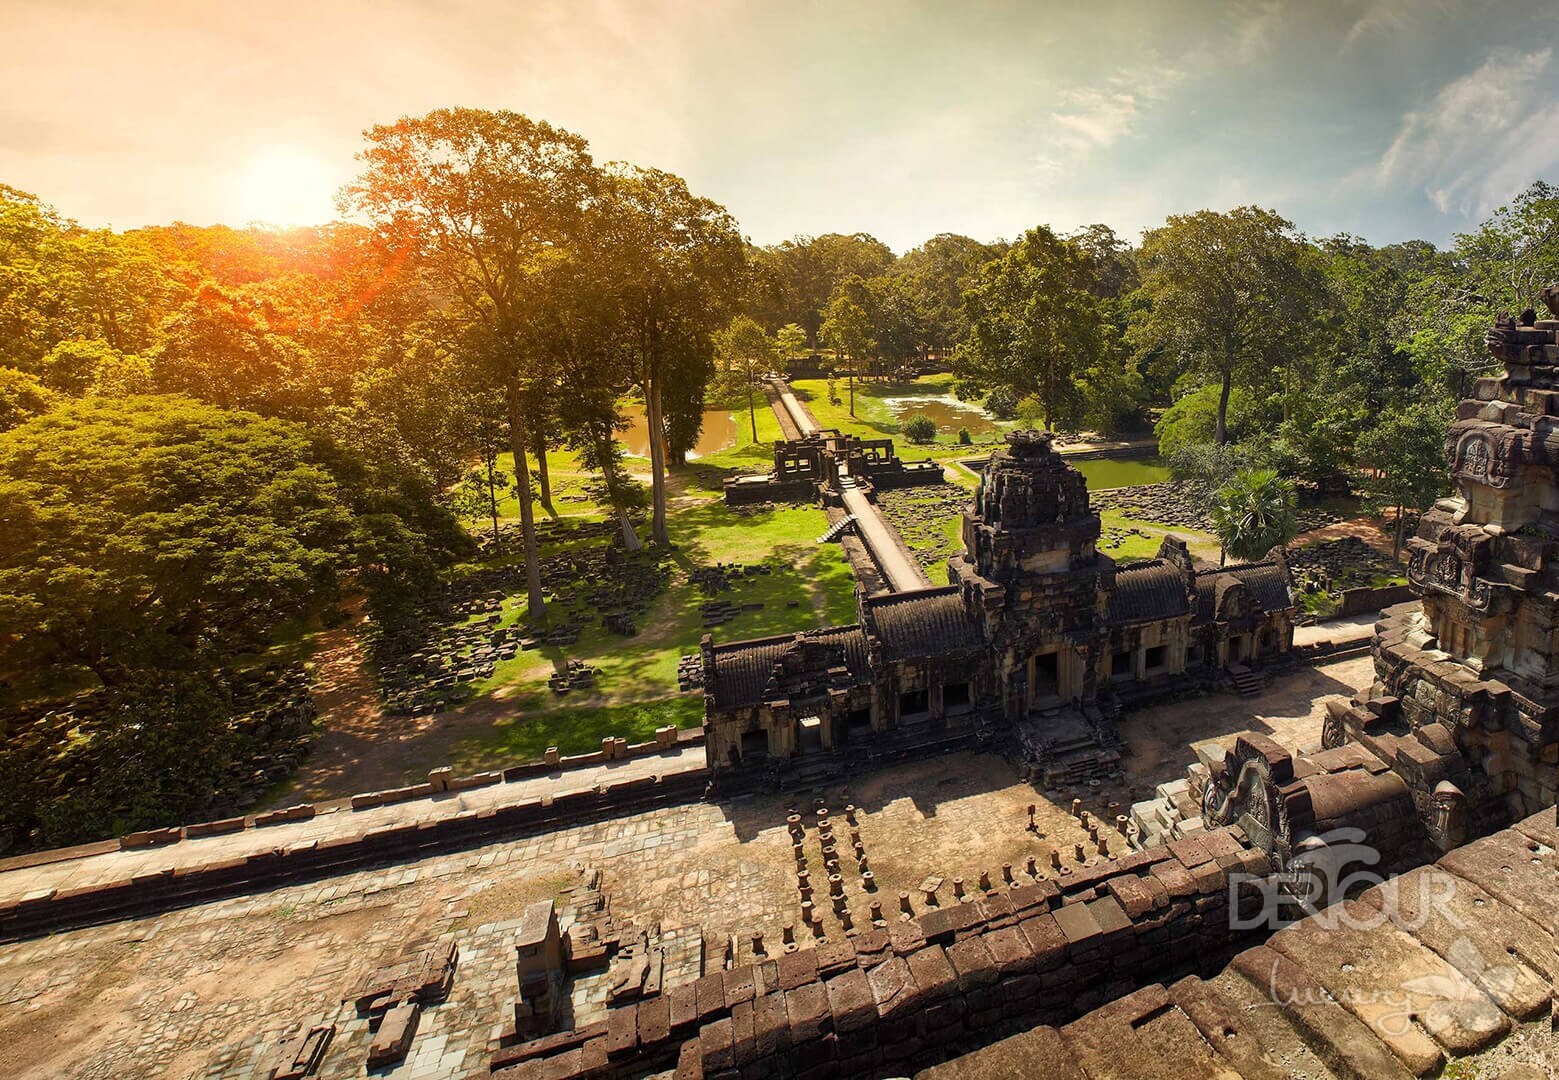 Angkor Wat - Kambodzsa híres templomegyüttese